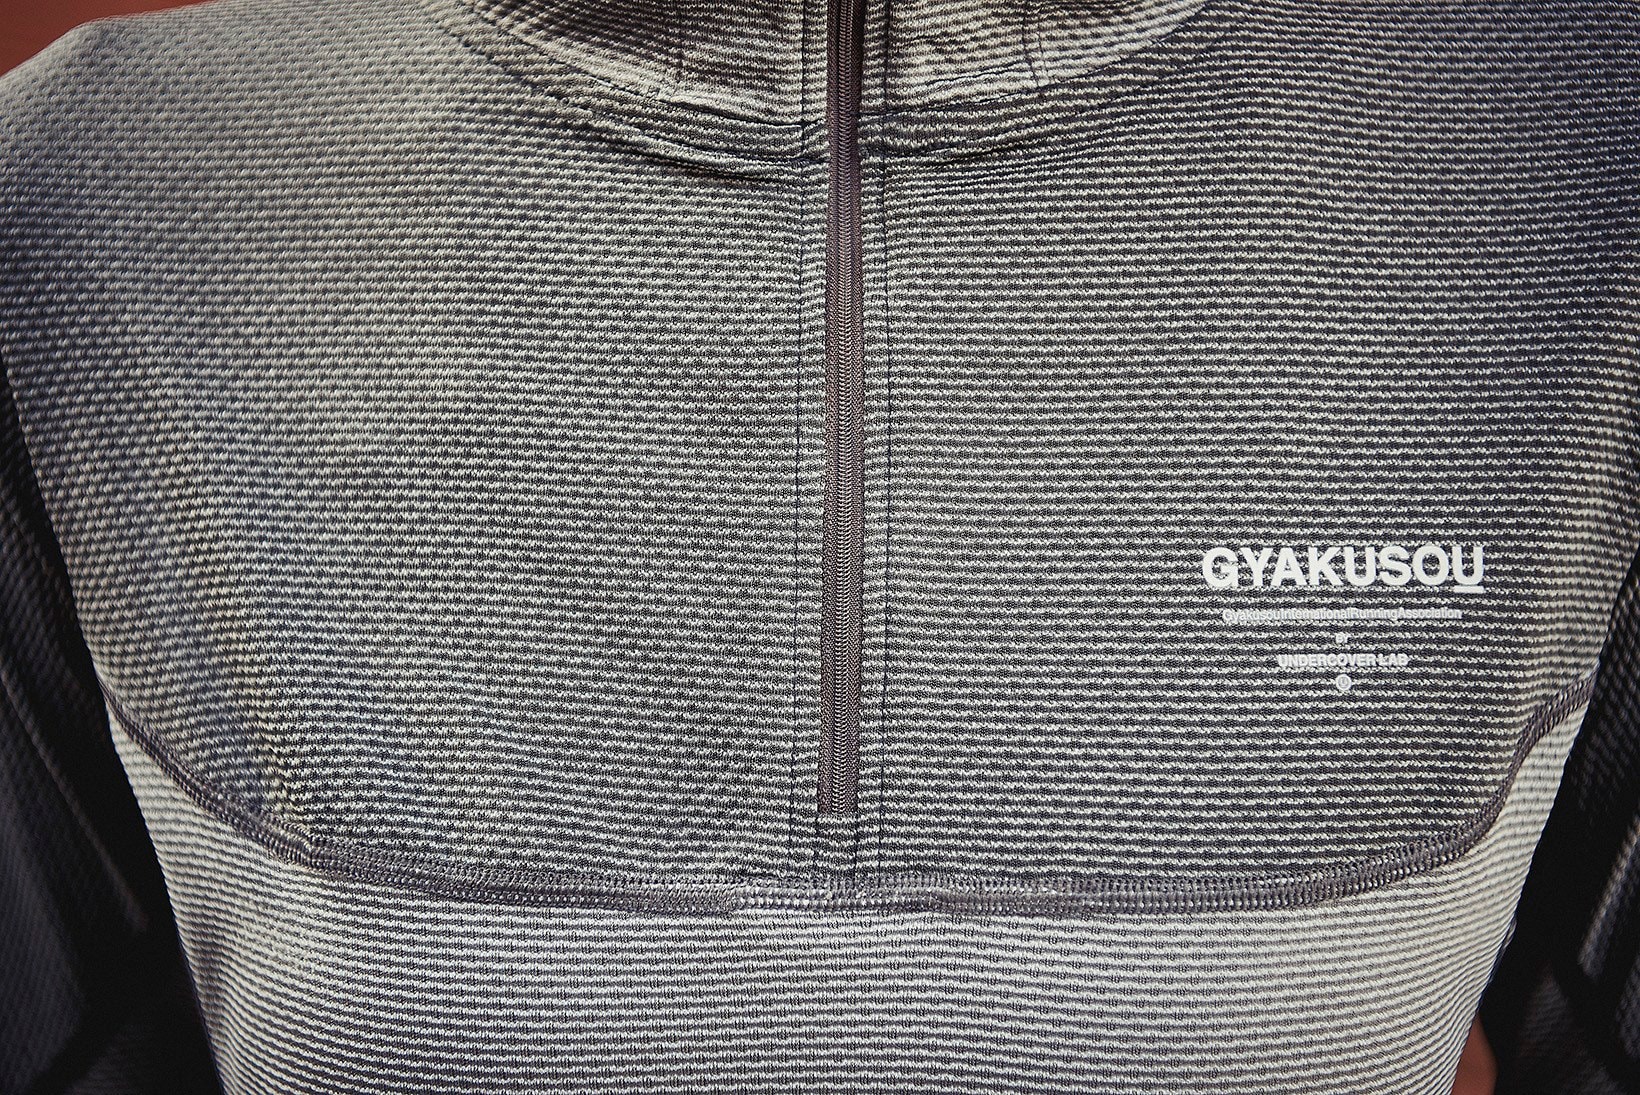 NikeLab 2016 Holiday Gyakusou Collection Jun Takahashi